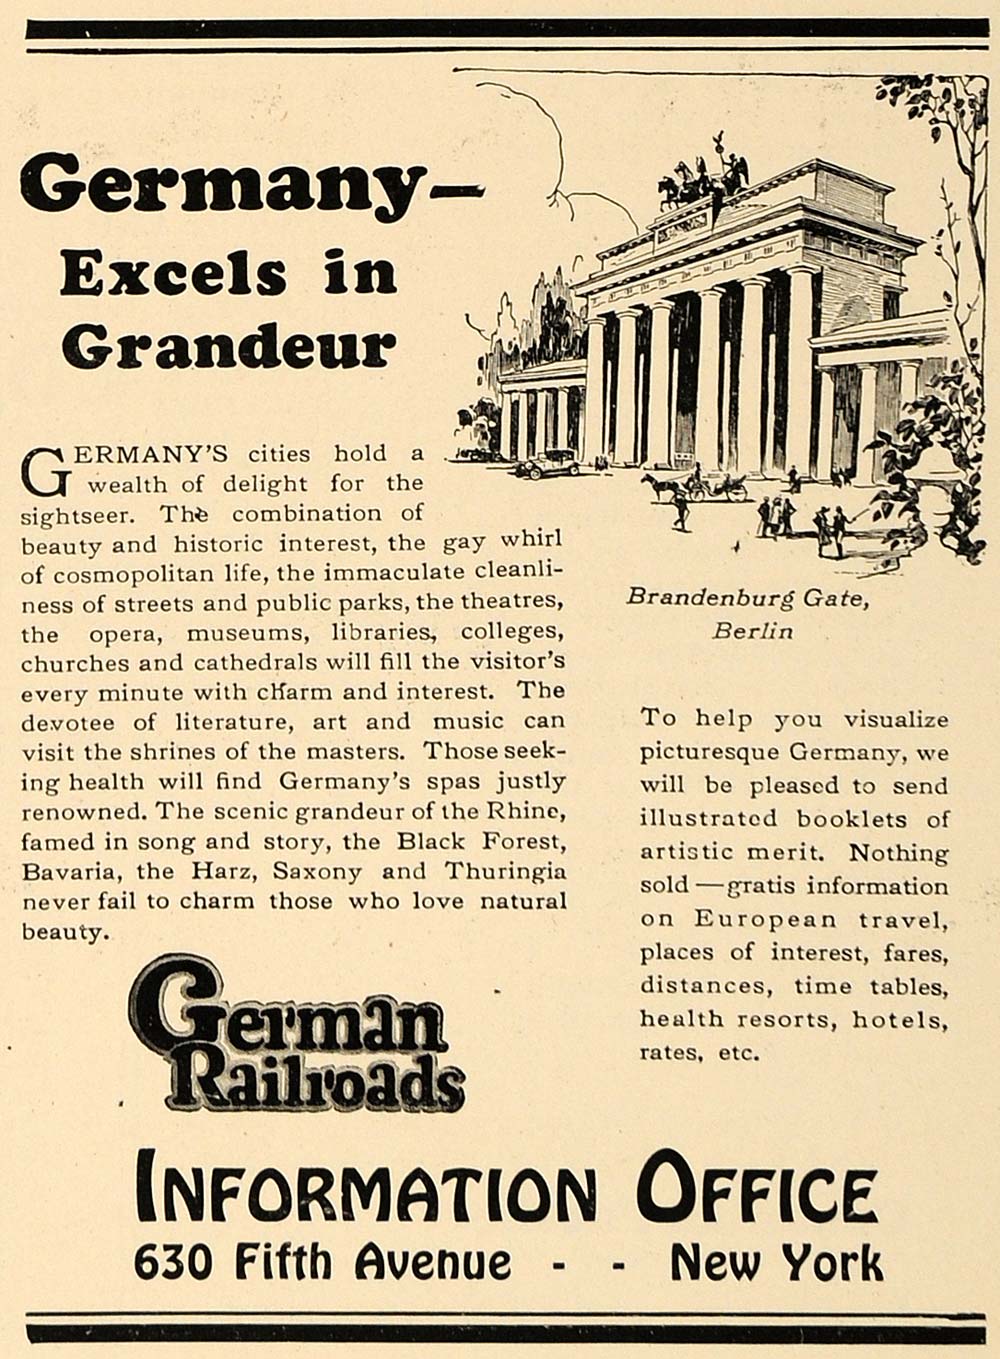 1926 Ad German Railroads Brandenburg Gate Berlin - ORIGINAL ADVERTISING CL8